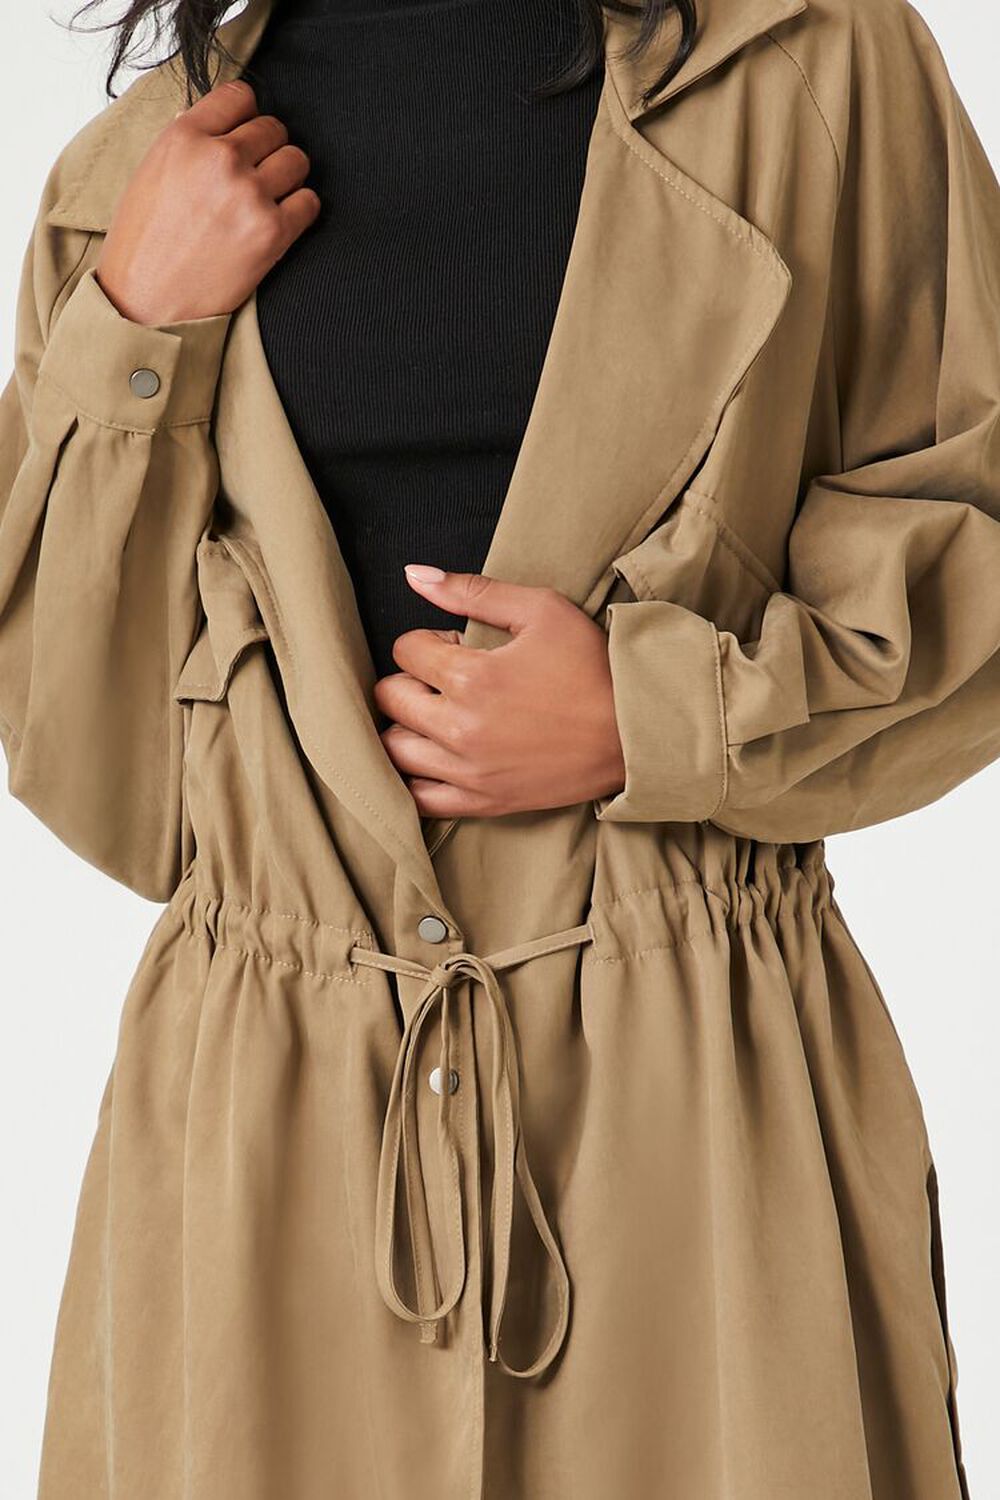 Forever 21 Women’s Military Khaki Canvas Coat Button Up Jacket Belt Size L